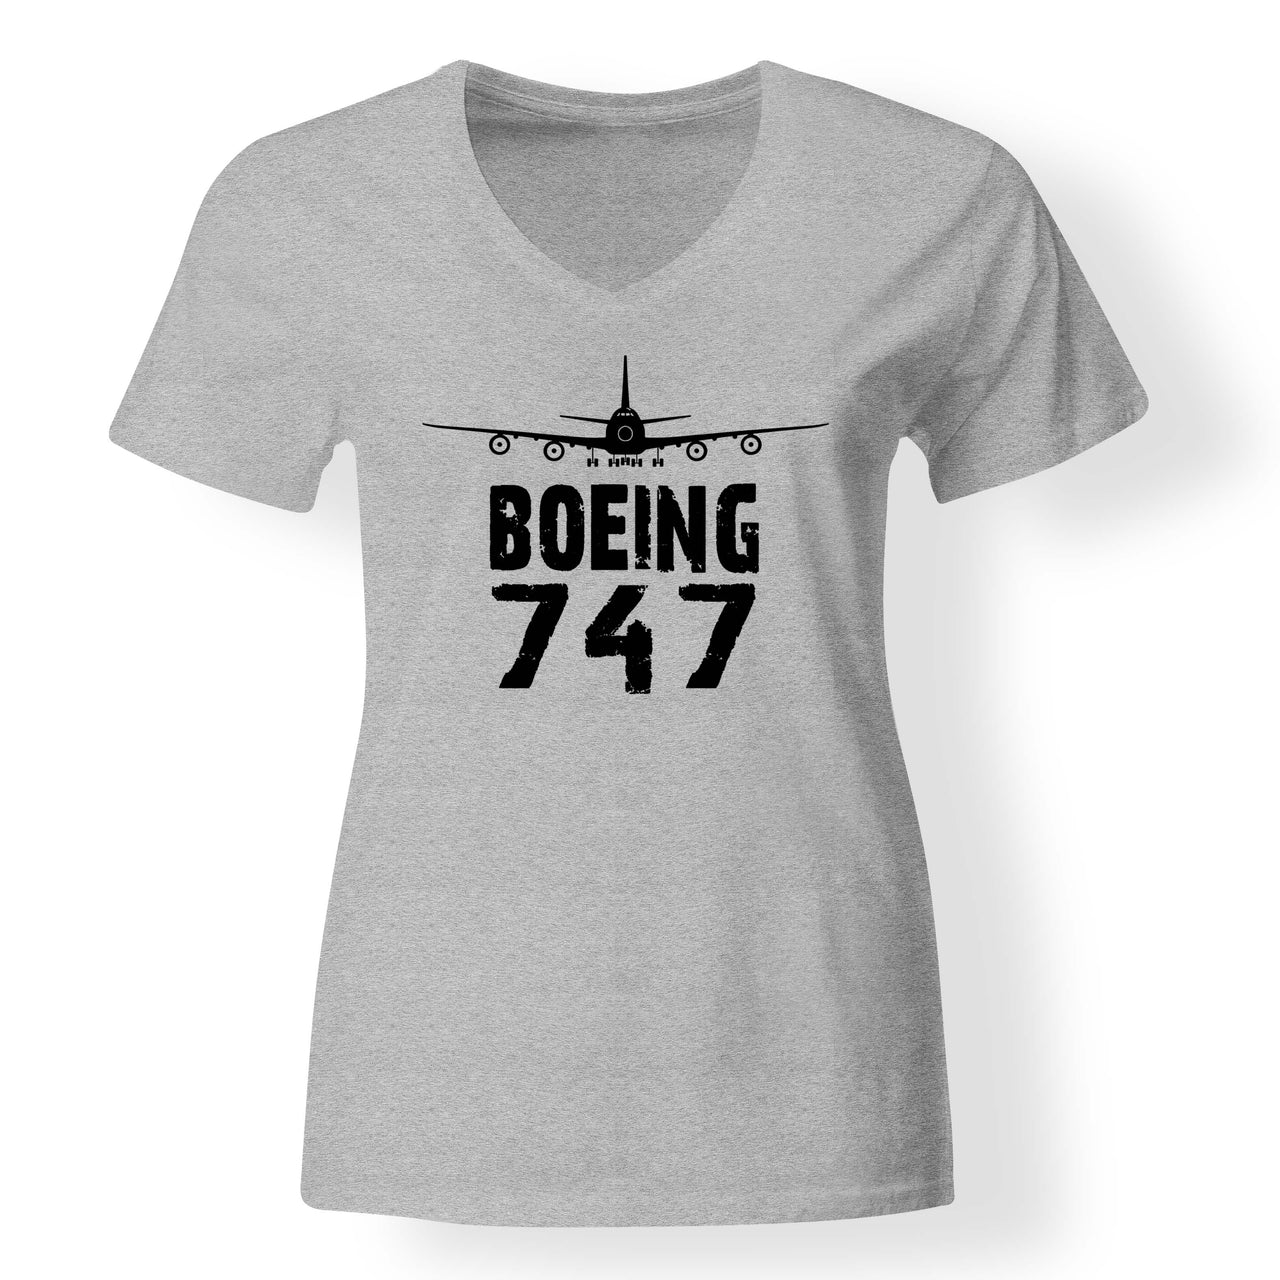 Boeing 747 & Plane Designed V-Neck T-Shirts